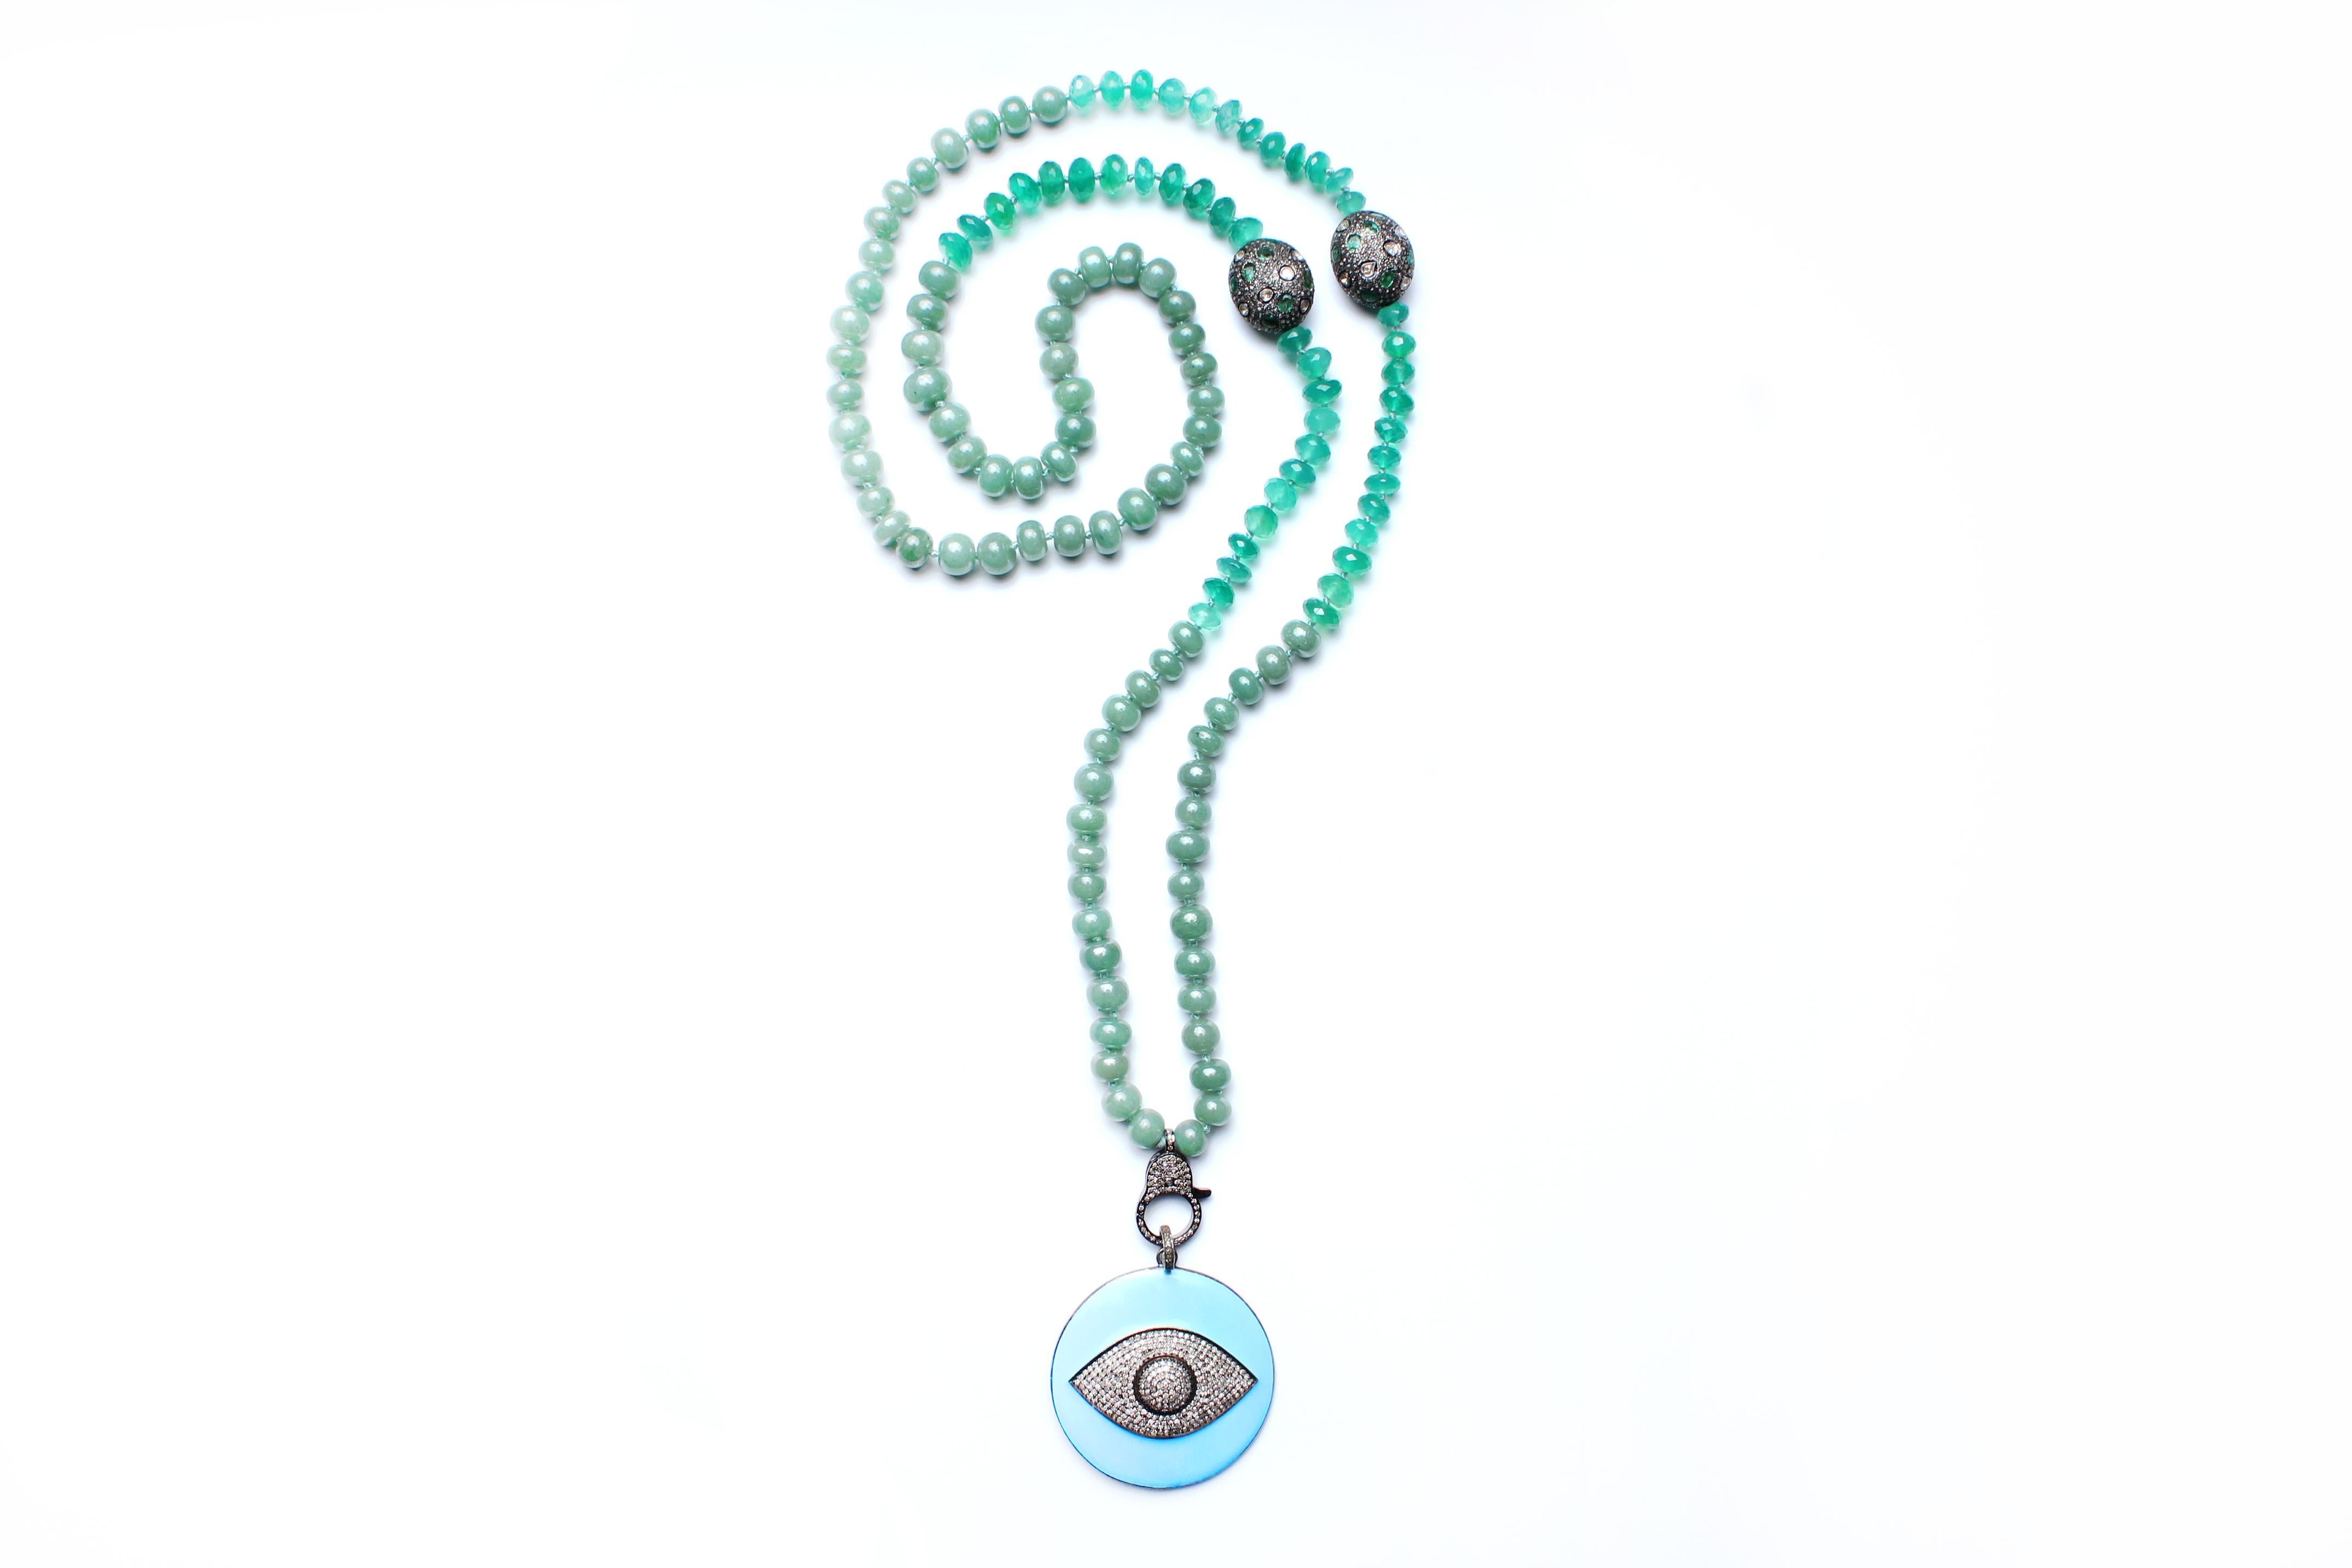 Emerald Cut Clarissa Bronfman Green Onyx Beaded Necklace with Diamond, Emerald, Enamel